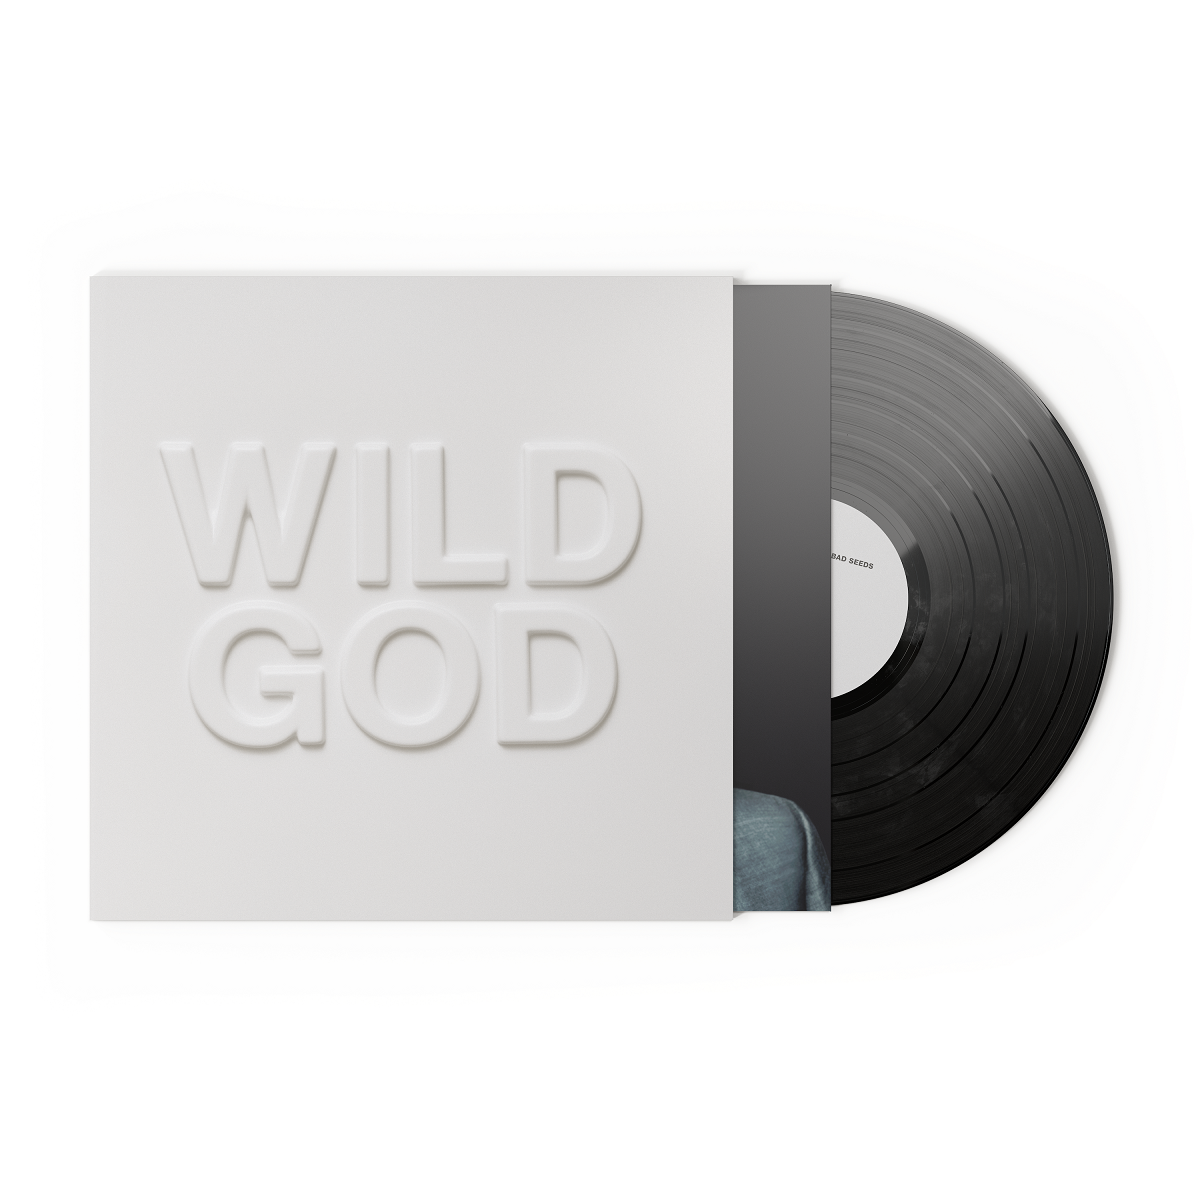 CD Shop - NICK CAVE & THE BAD SEEDS WILD GOD